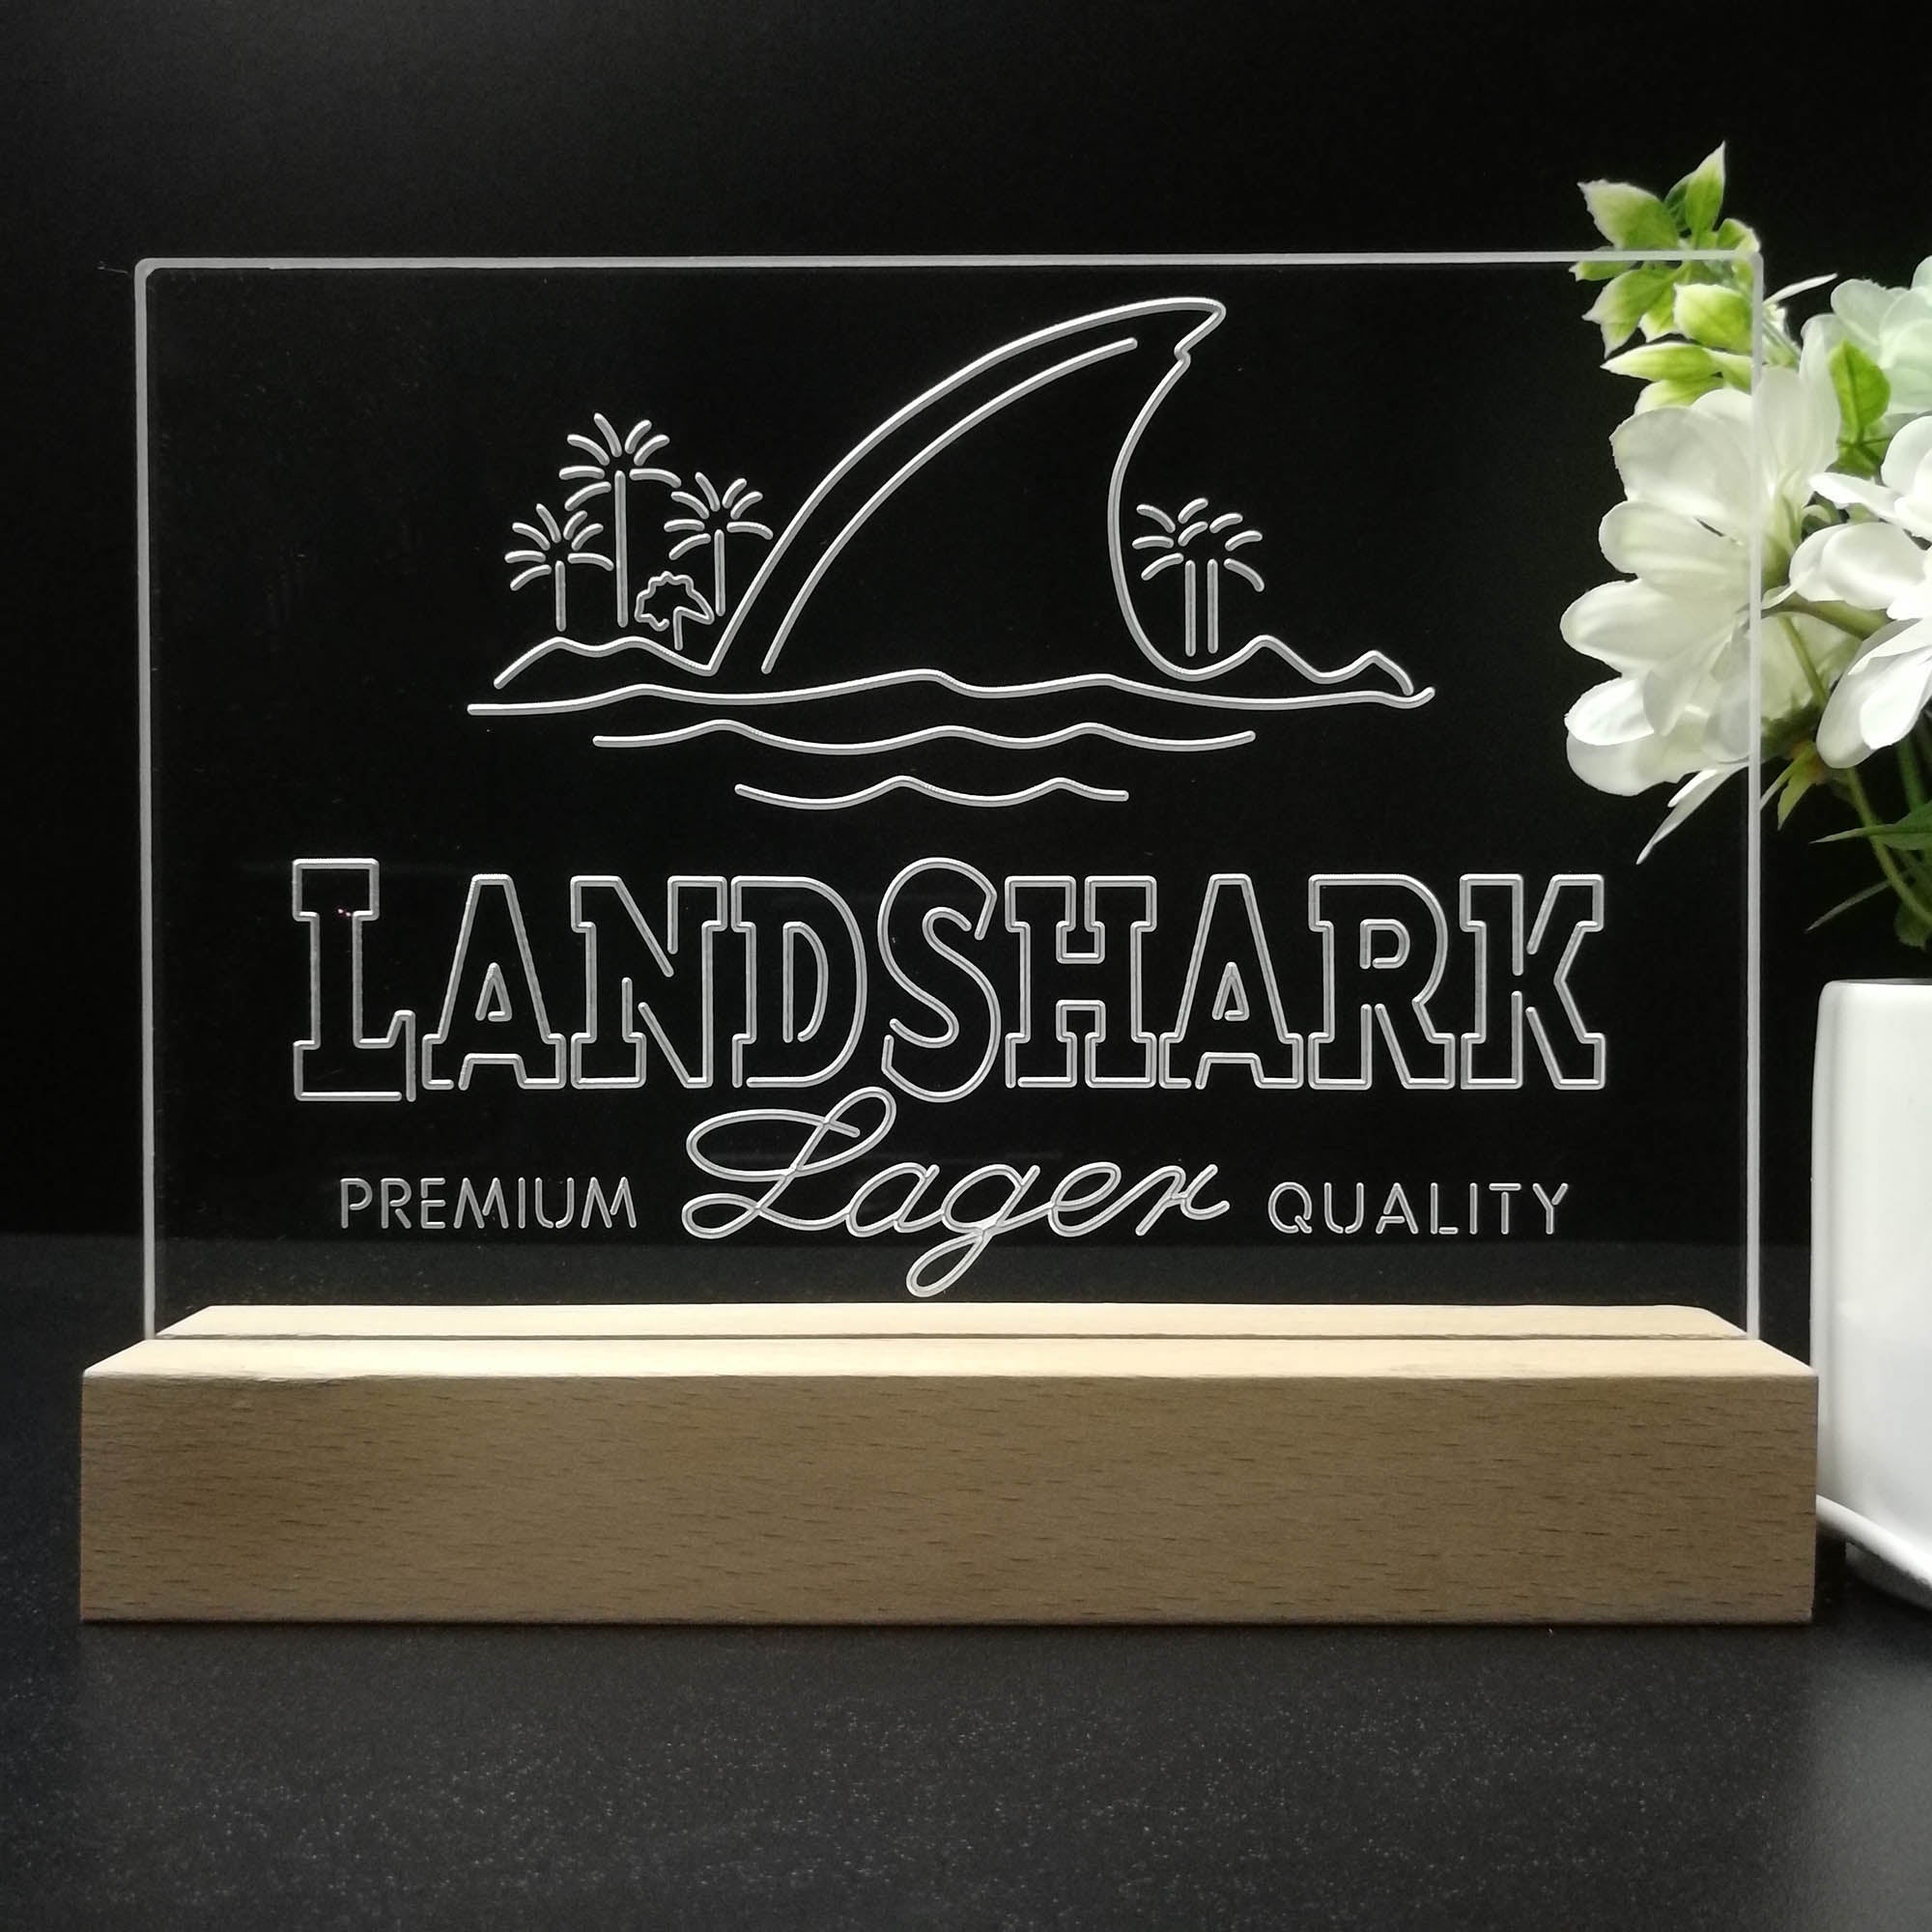 Landshark Lager Premium Quality Neon Sign Pub Bar Decor Lamp